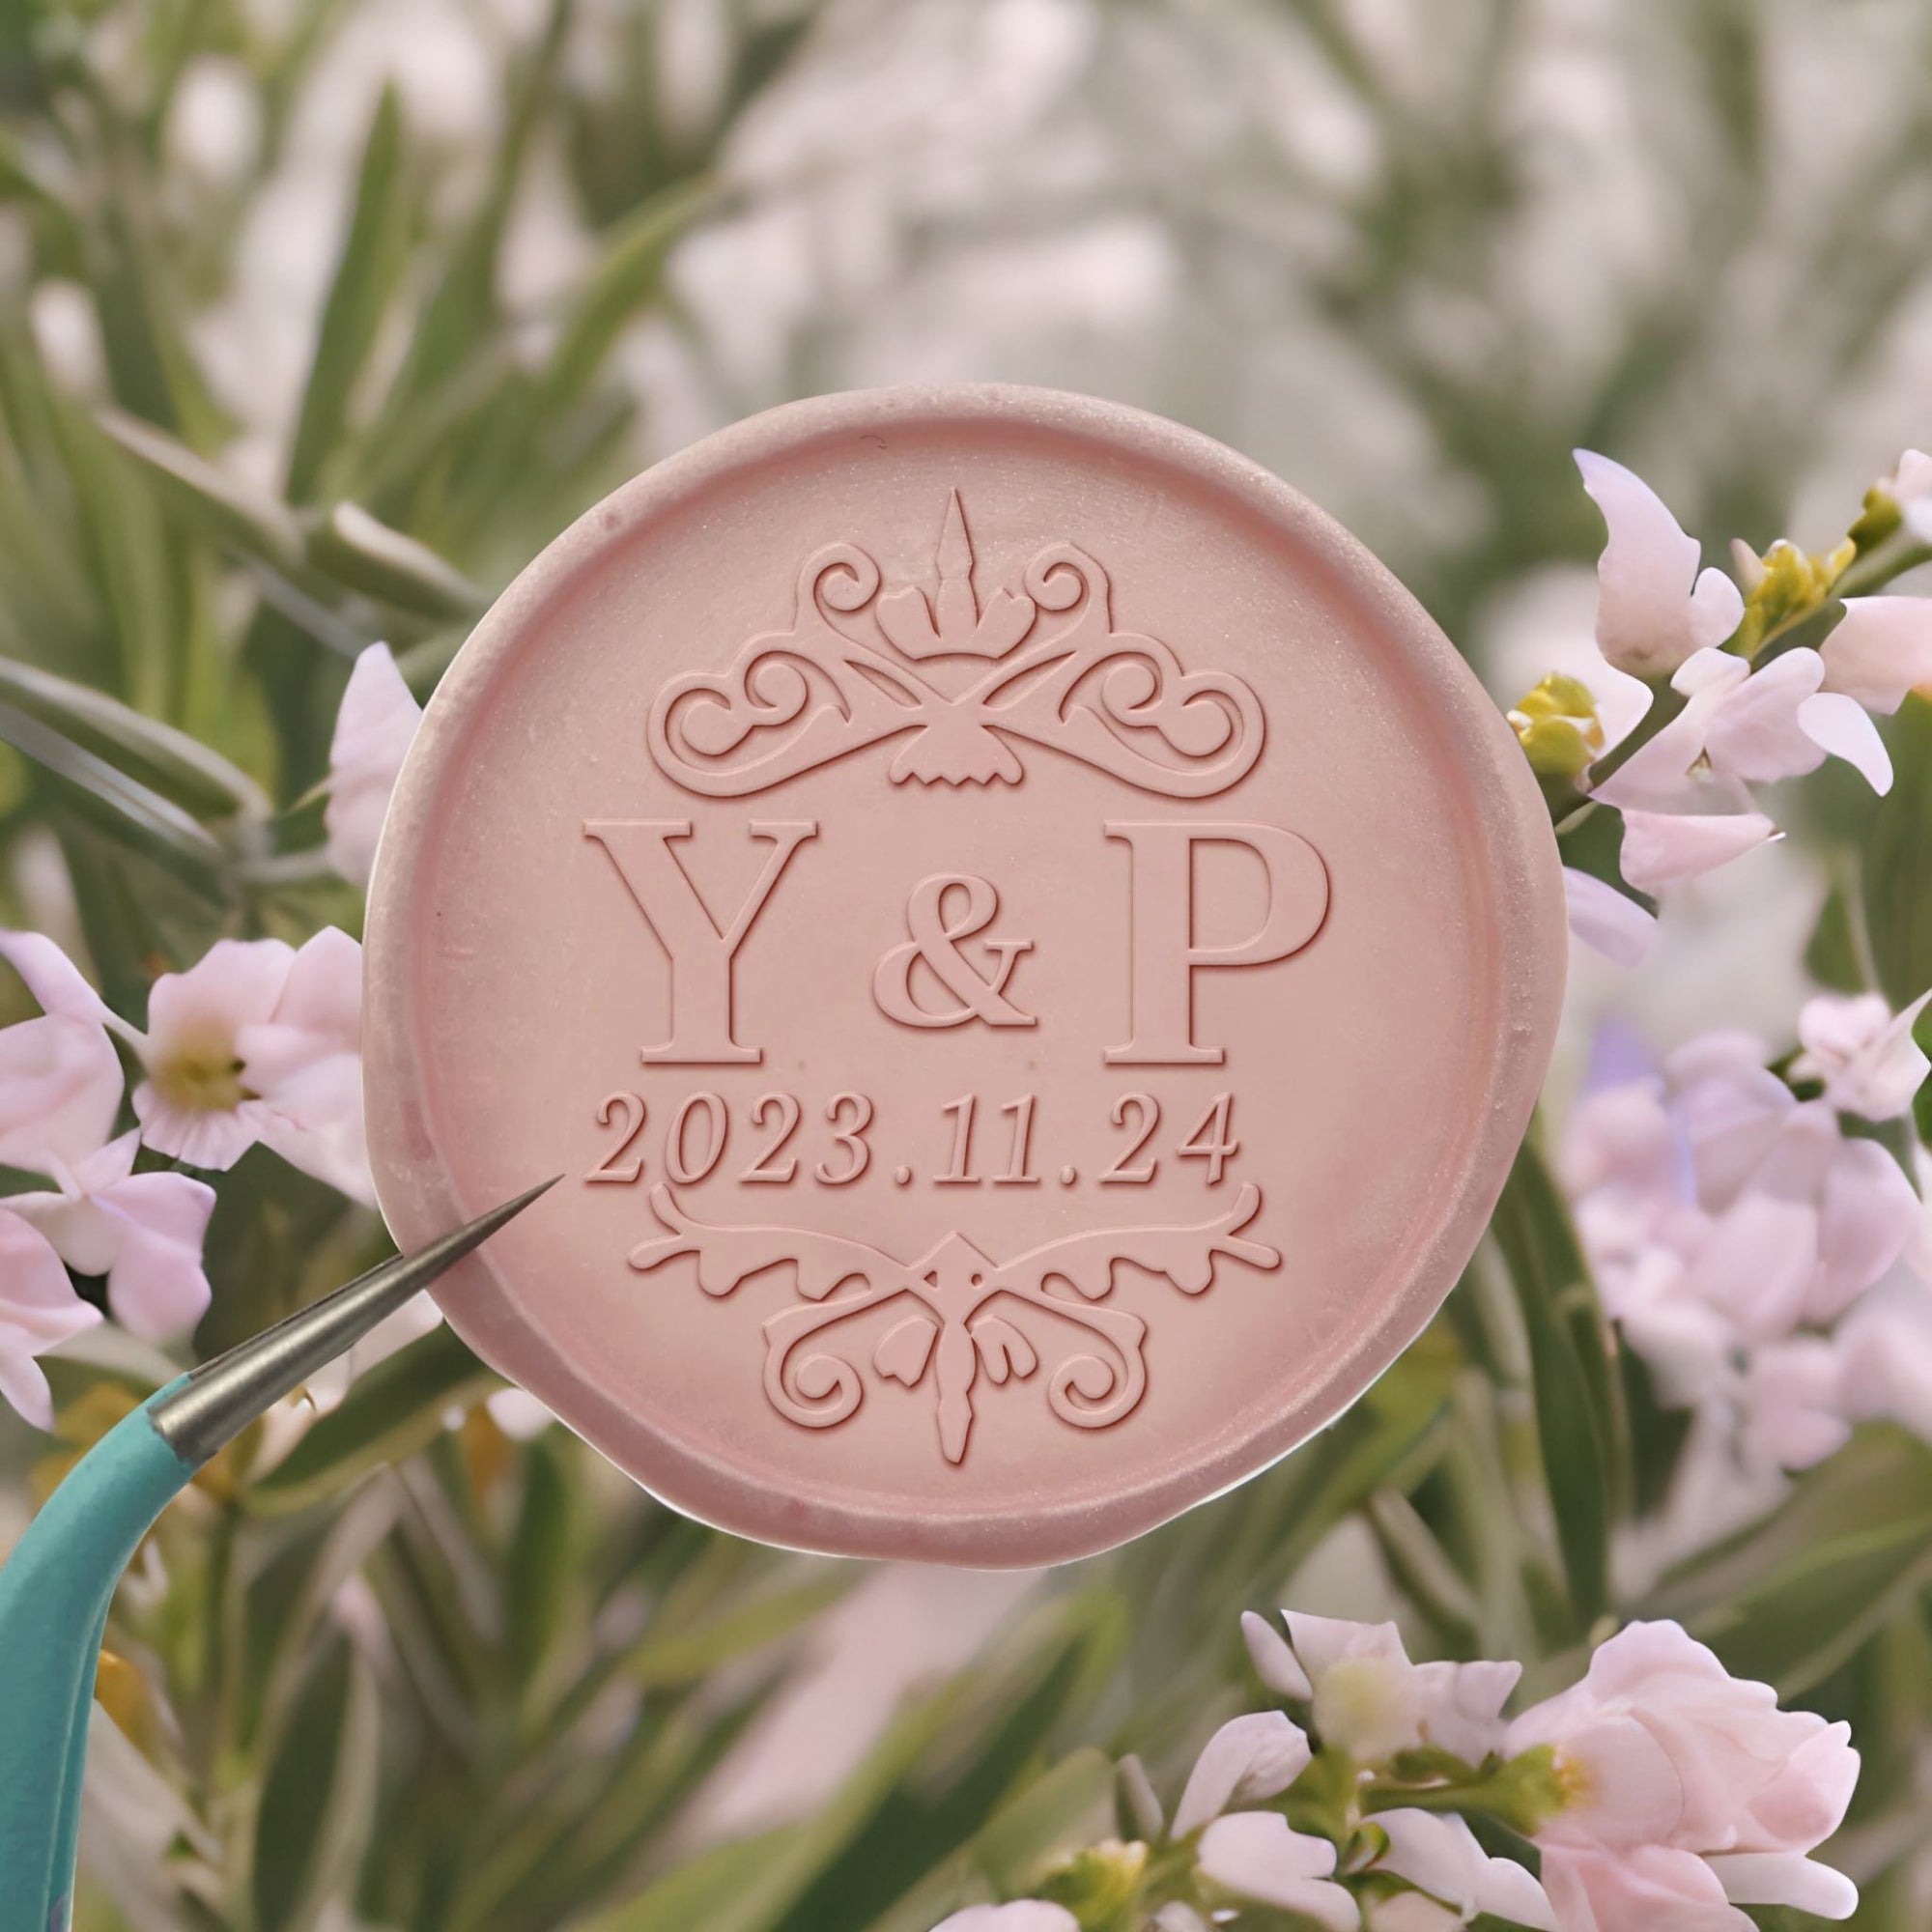 Basic Date Double Initials Wedding Custom Self-Adhesive Wax Seal Stickers